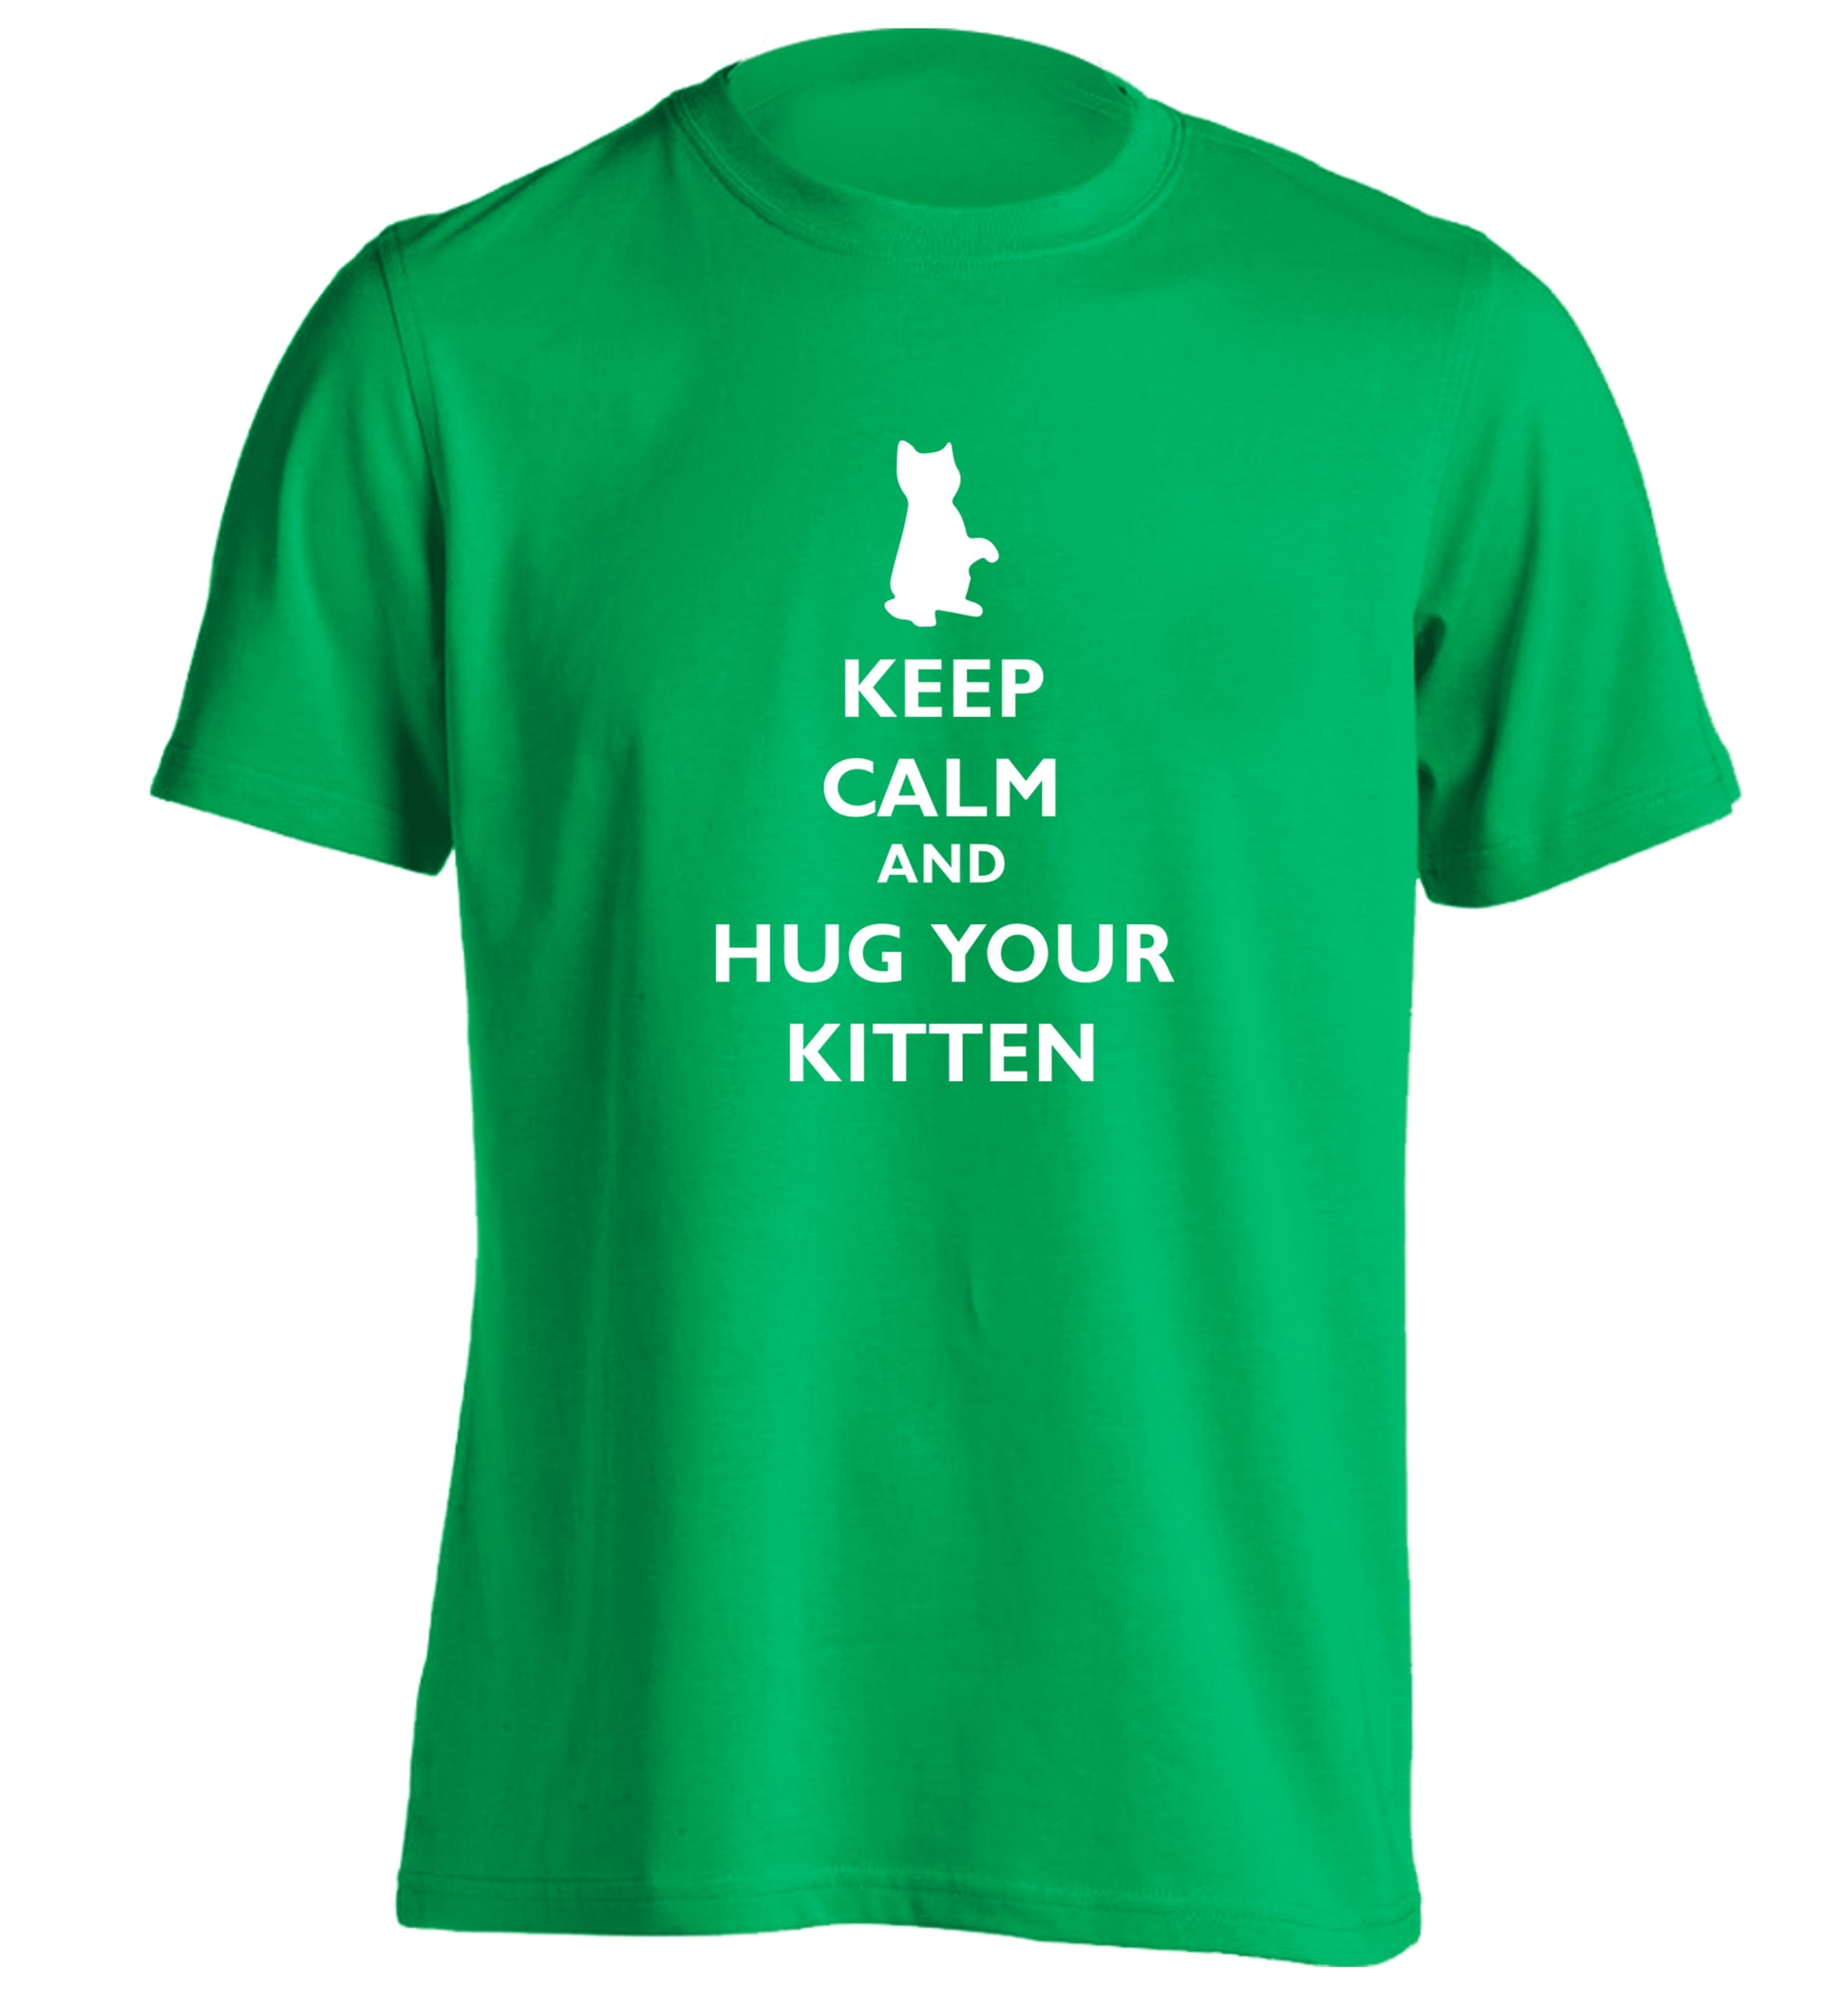 Keep calm and hug your kitten adults unisex green Tshirt 2XL